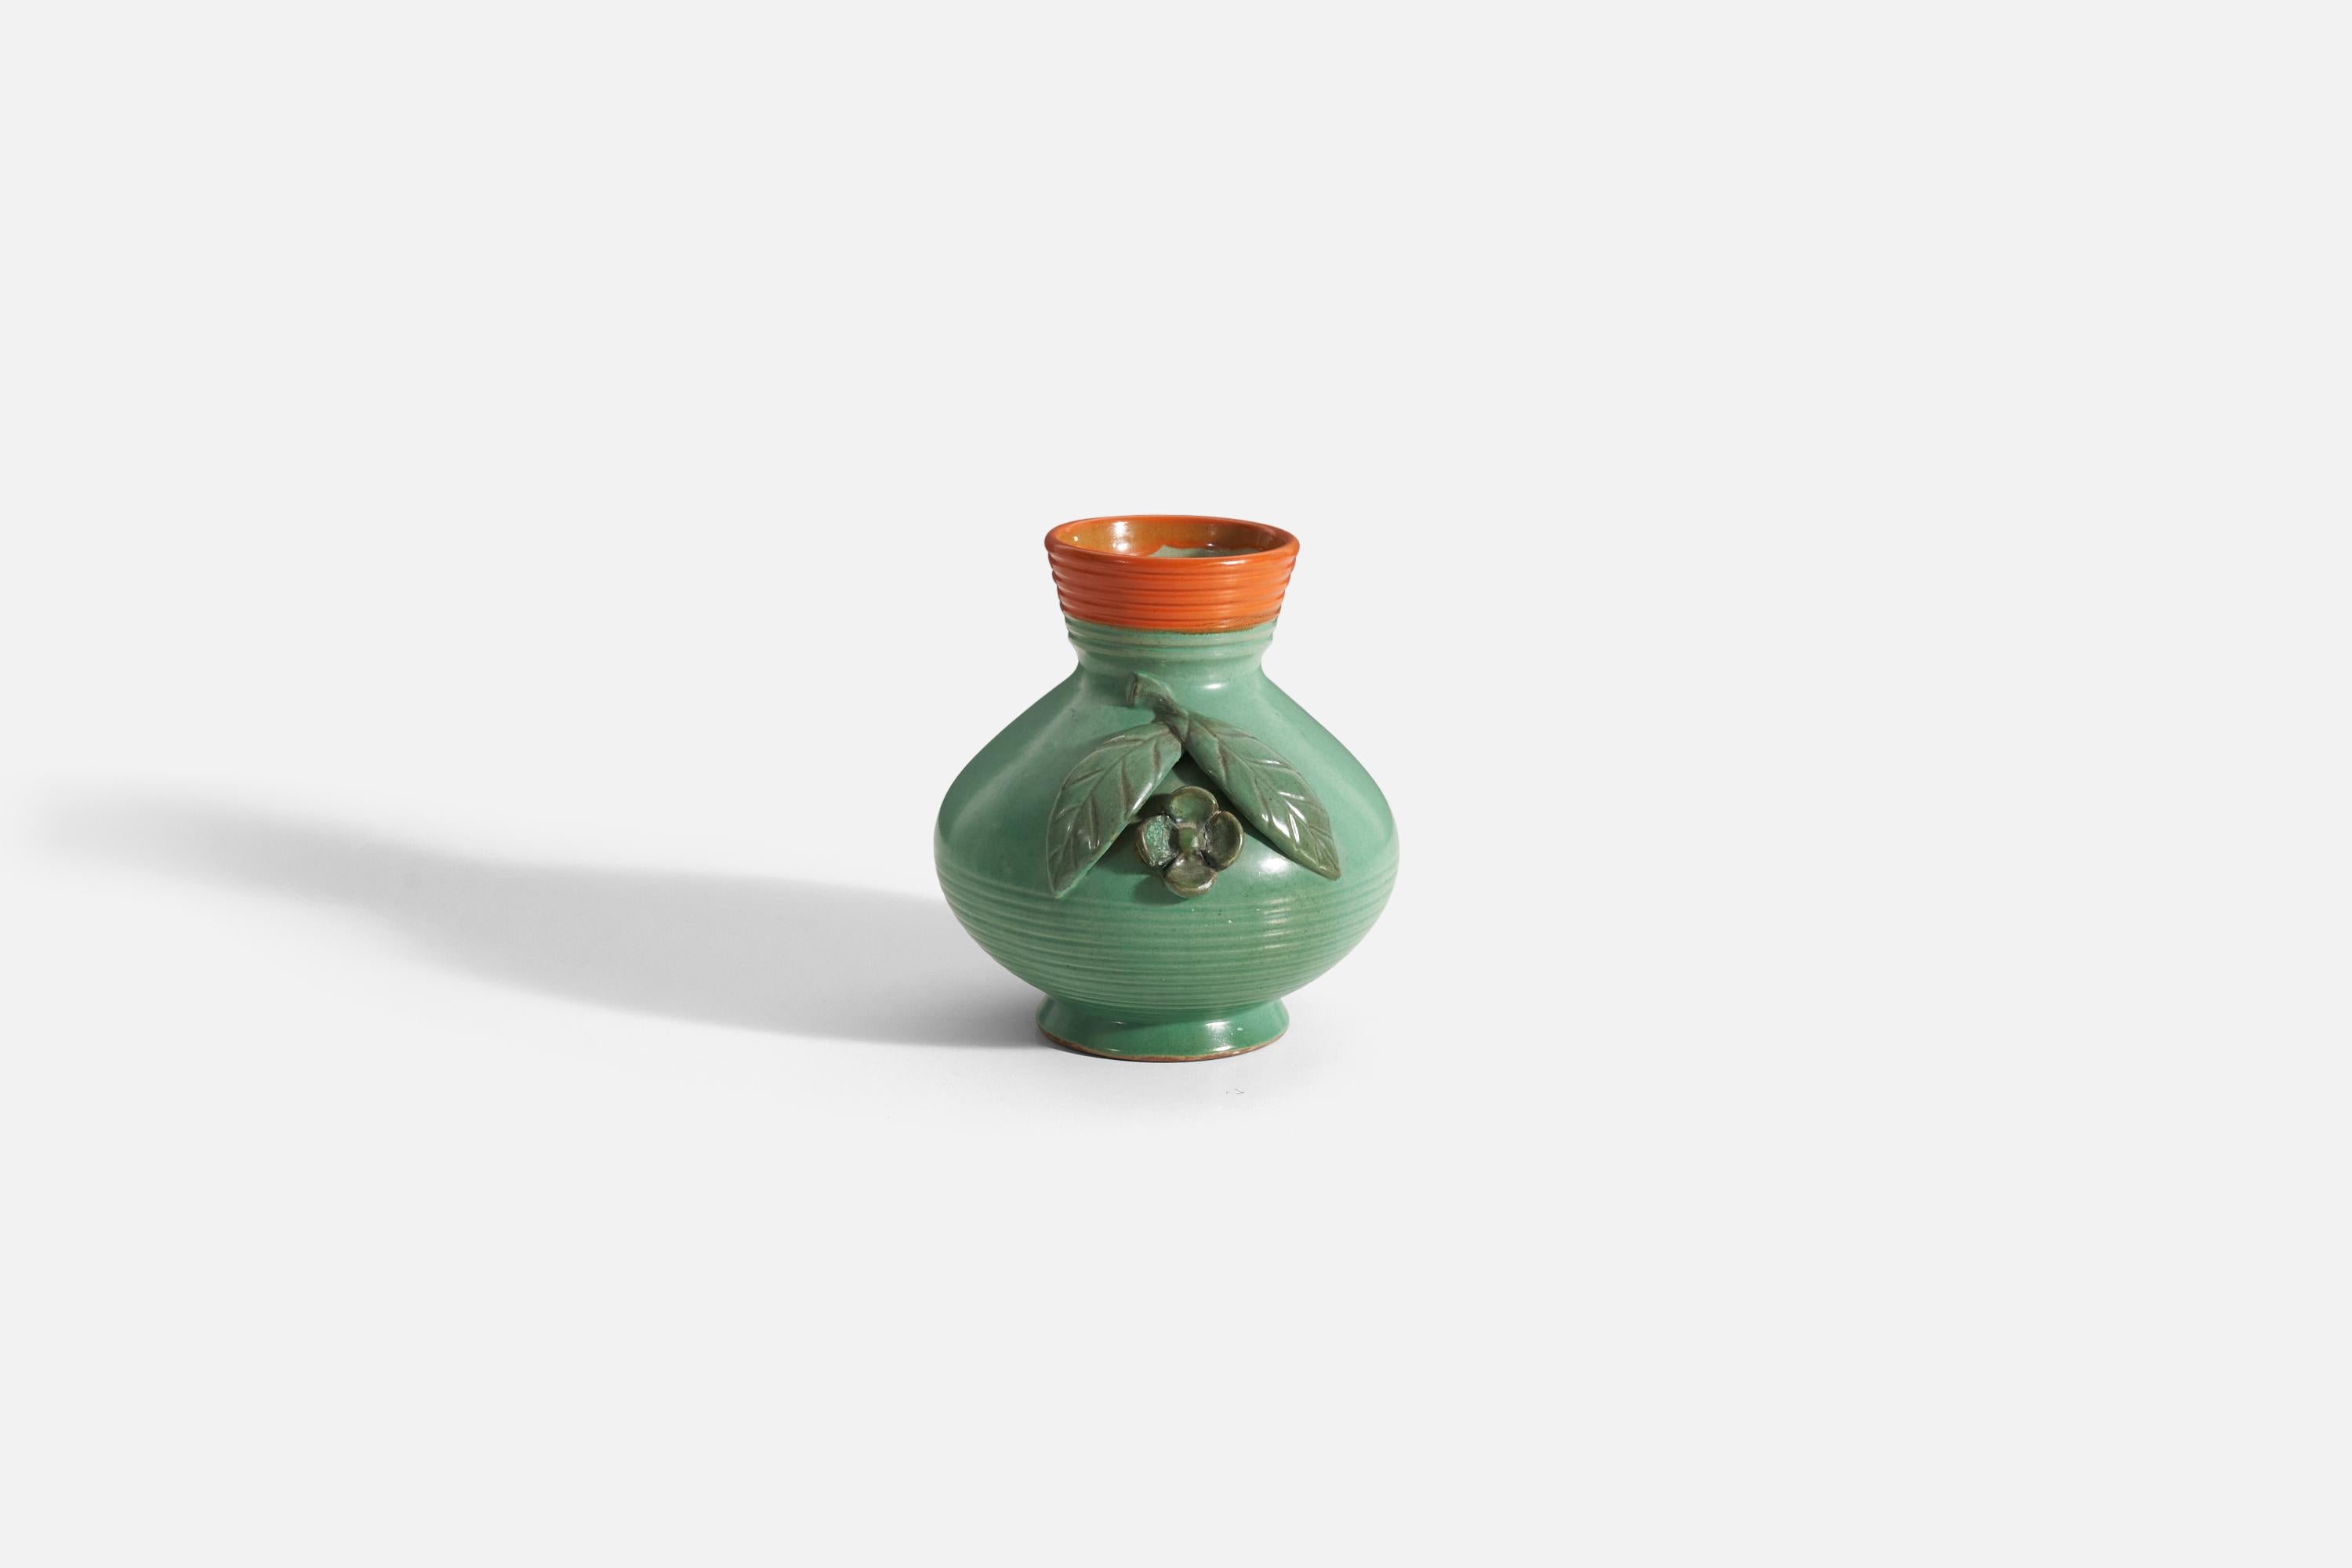 A green and orange-glazed earthenware vase designed and produced by Töreboda Keramik, Sweden, c. 1940s.
 